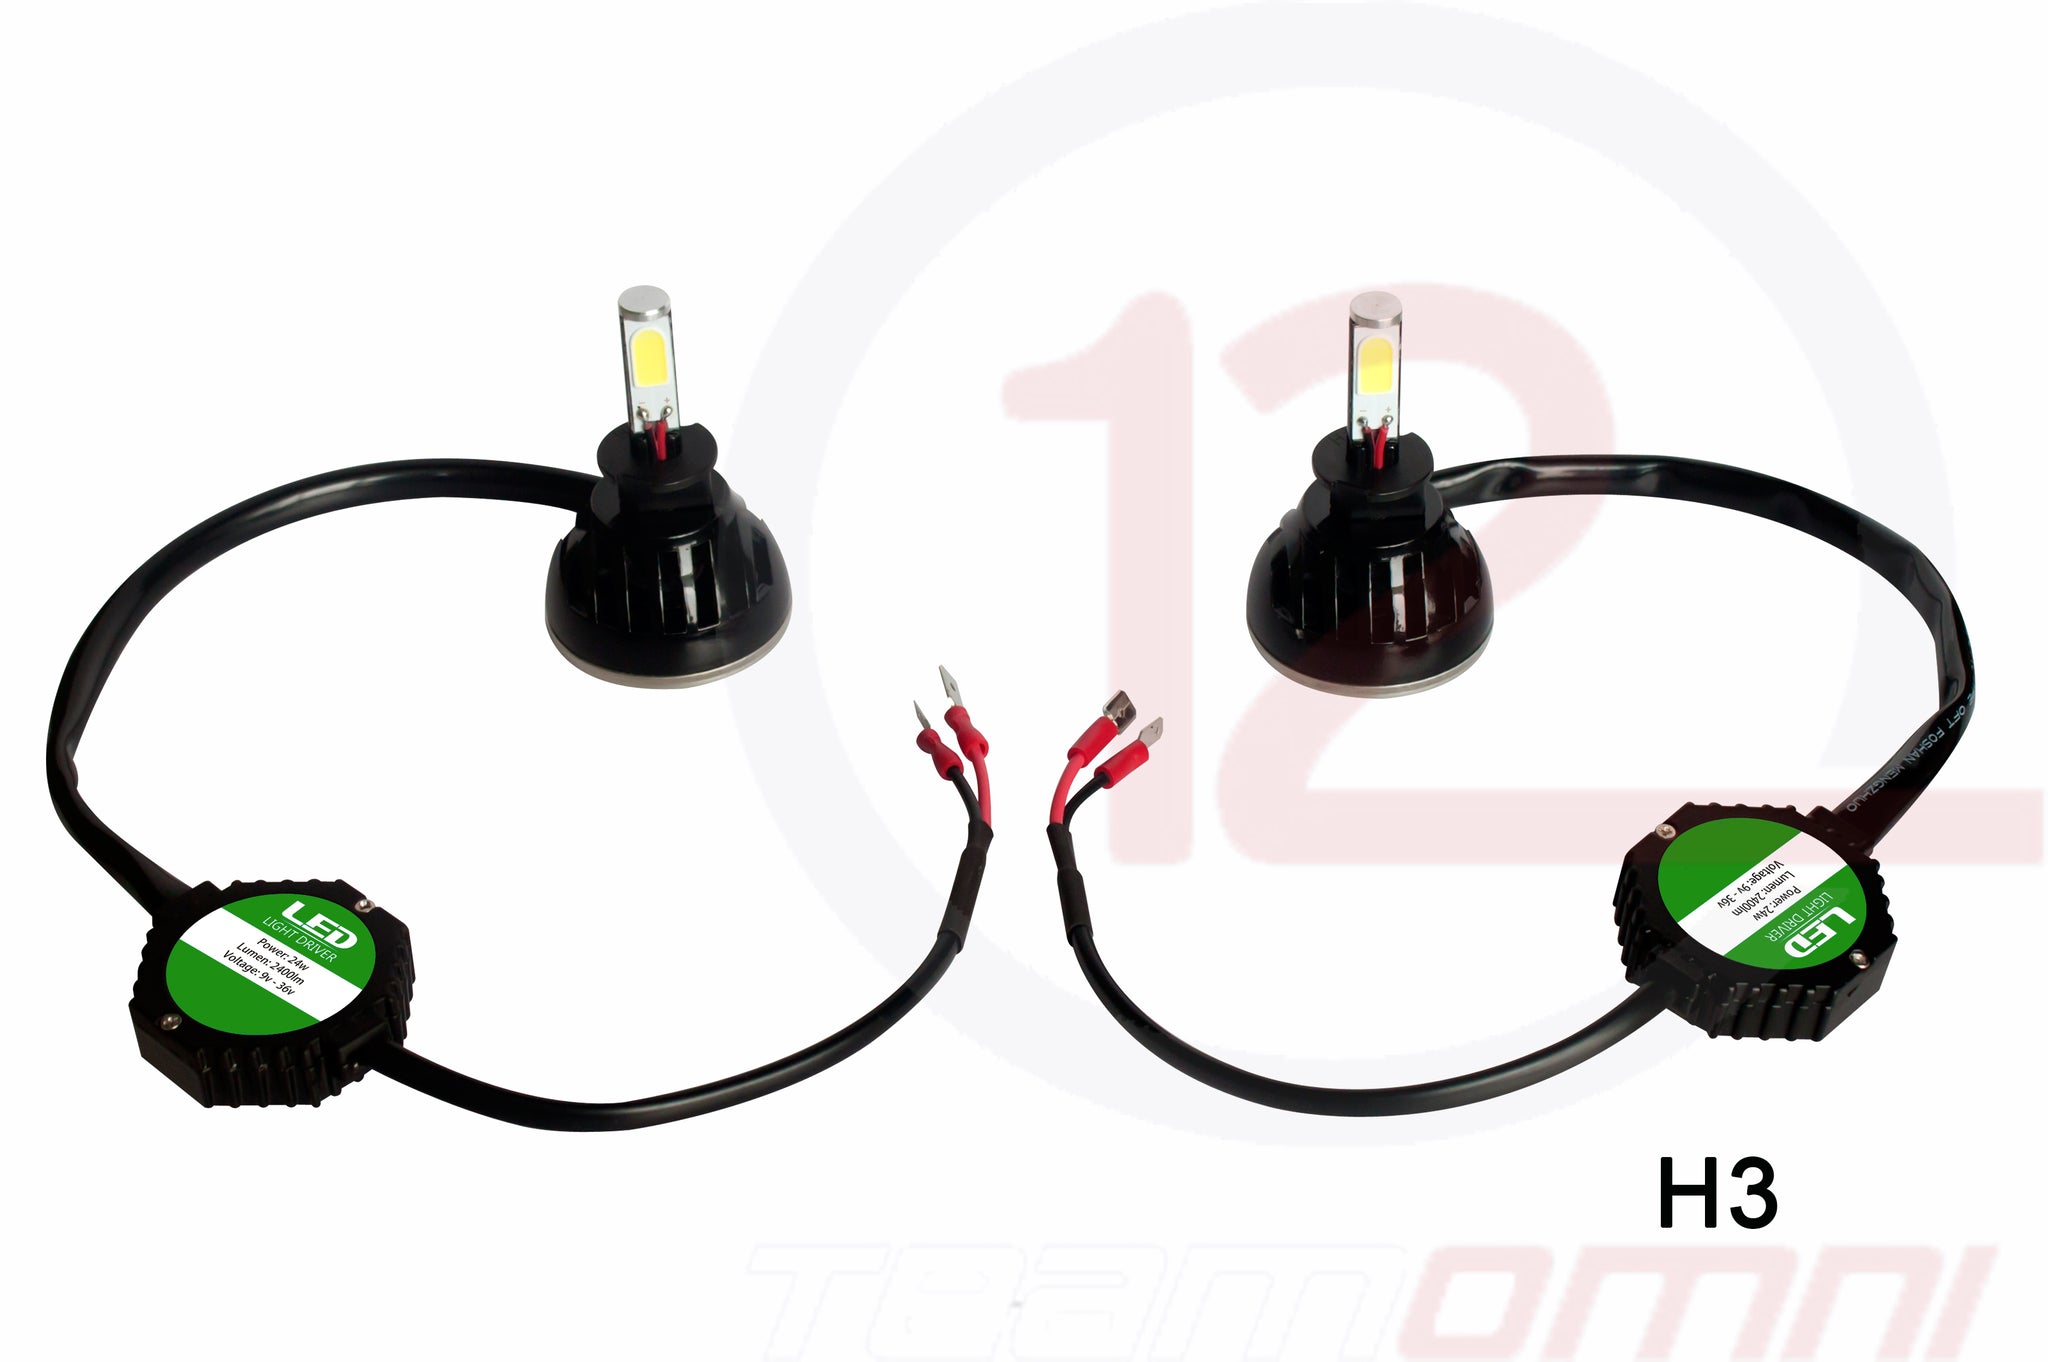 H11 REVO R6 – 5 Sided 9600 Lumen – Canbus Error FREE – LED Conversion Kit